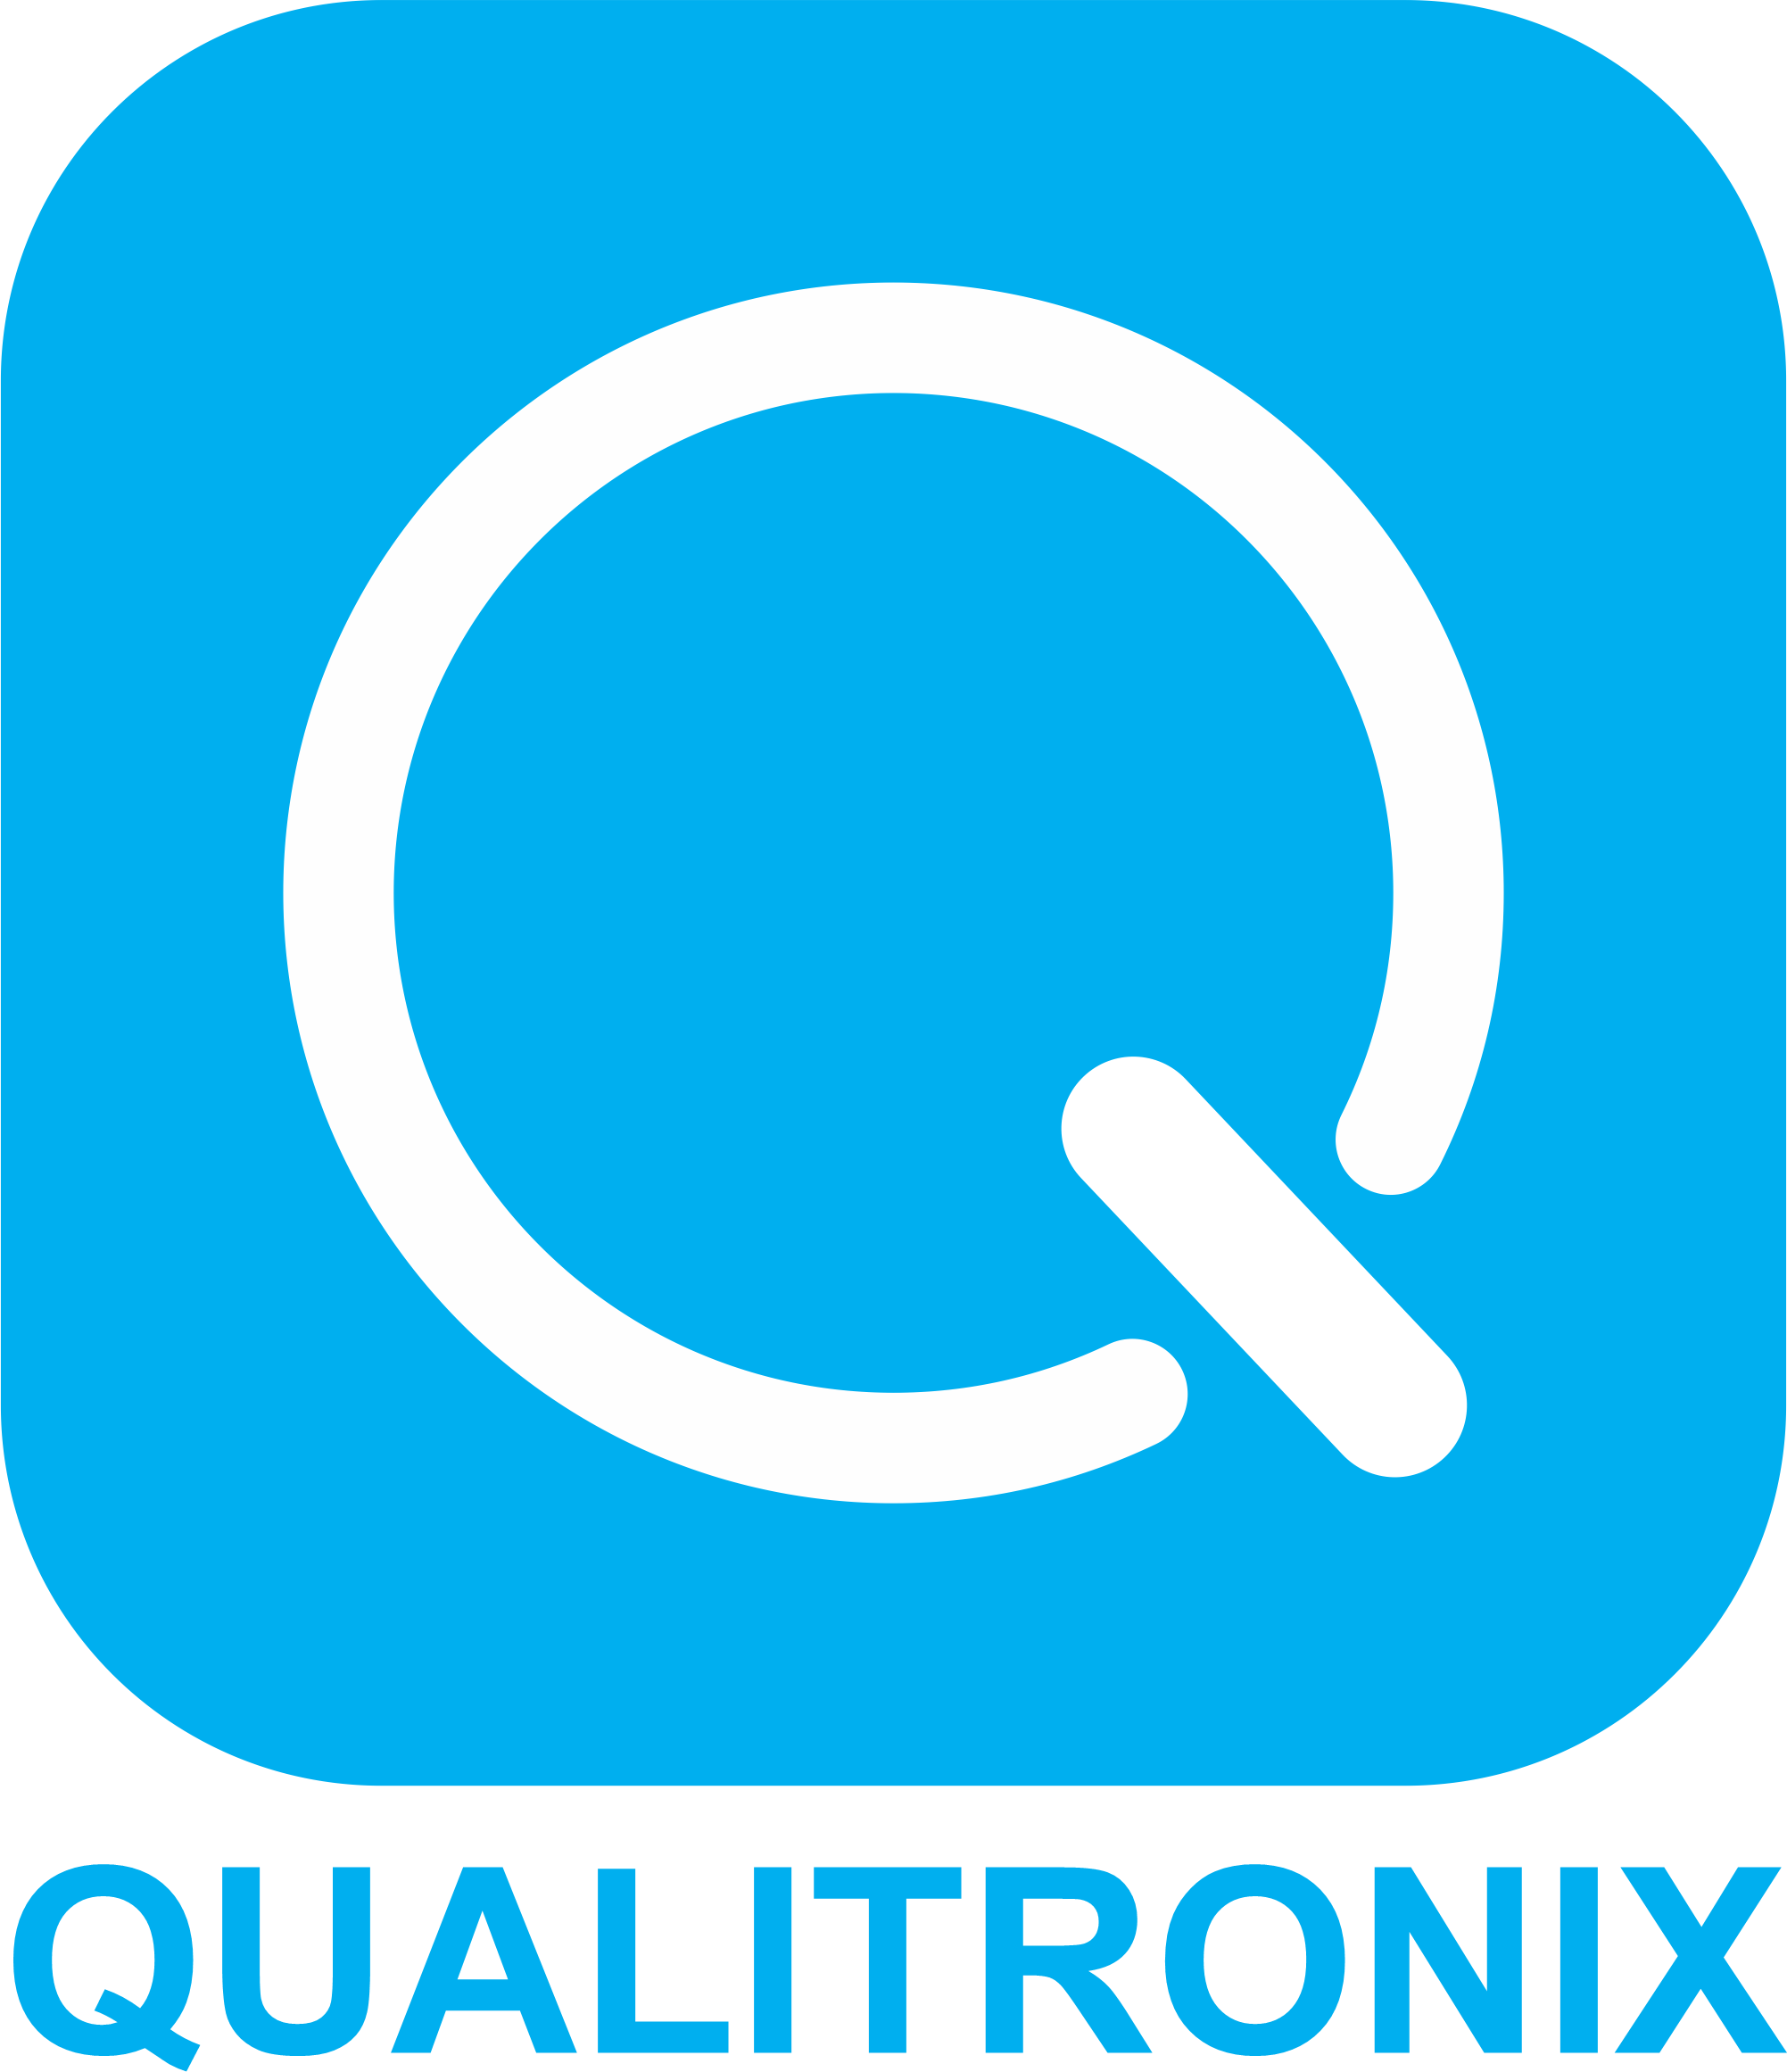 Logomarca do fornecedor Qualitronix